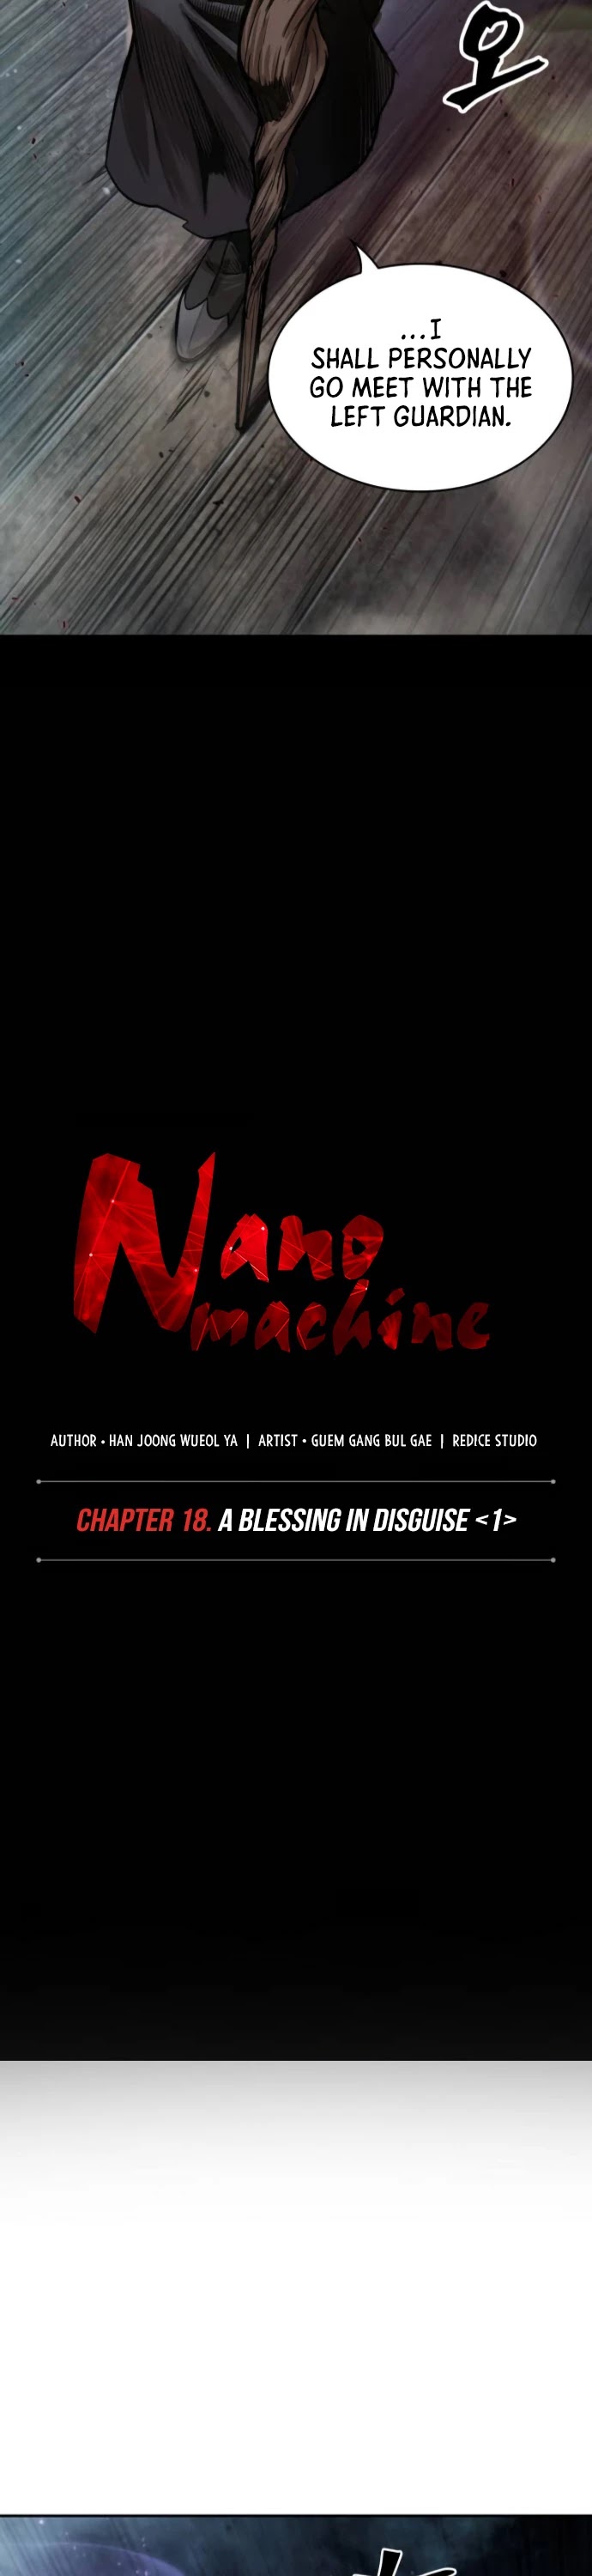 nano machine chapter